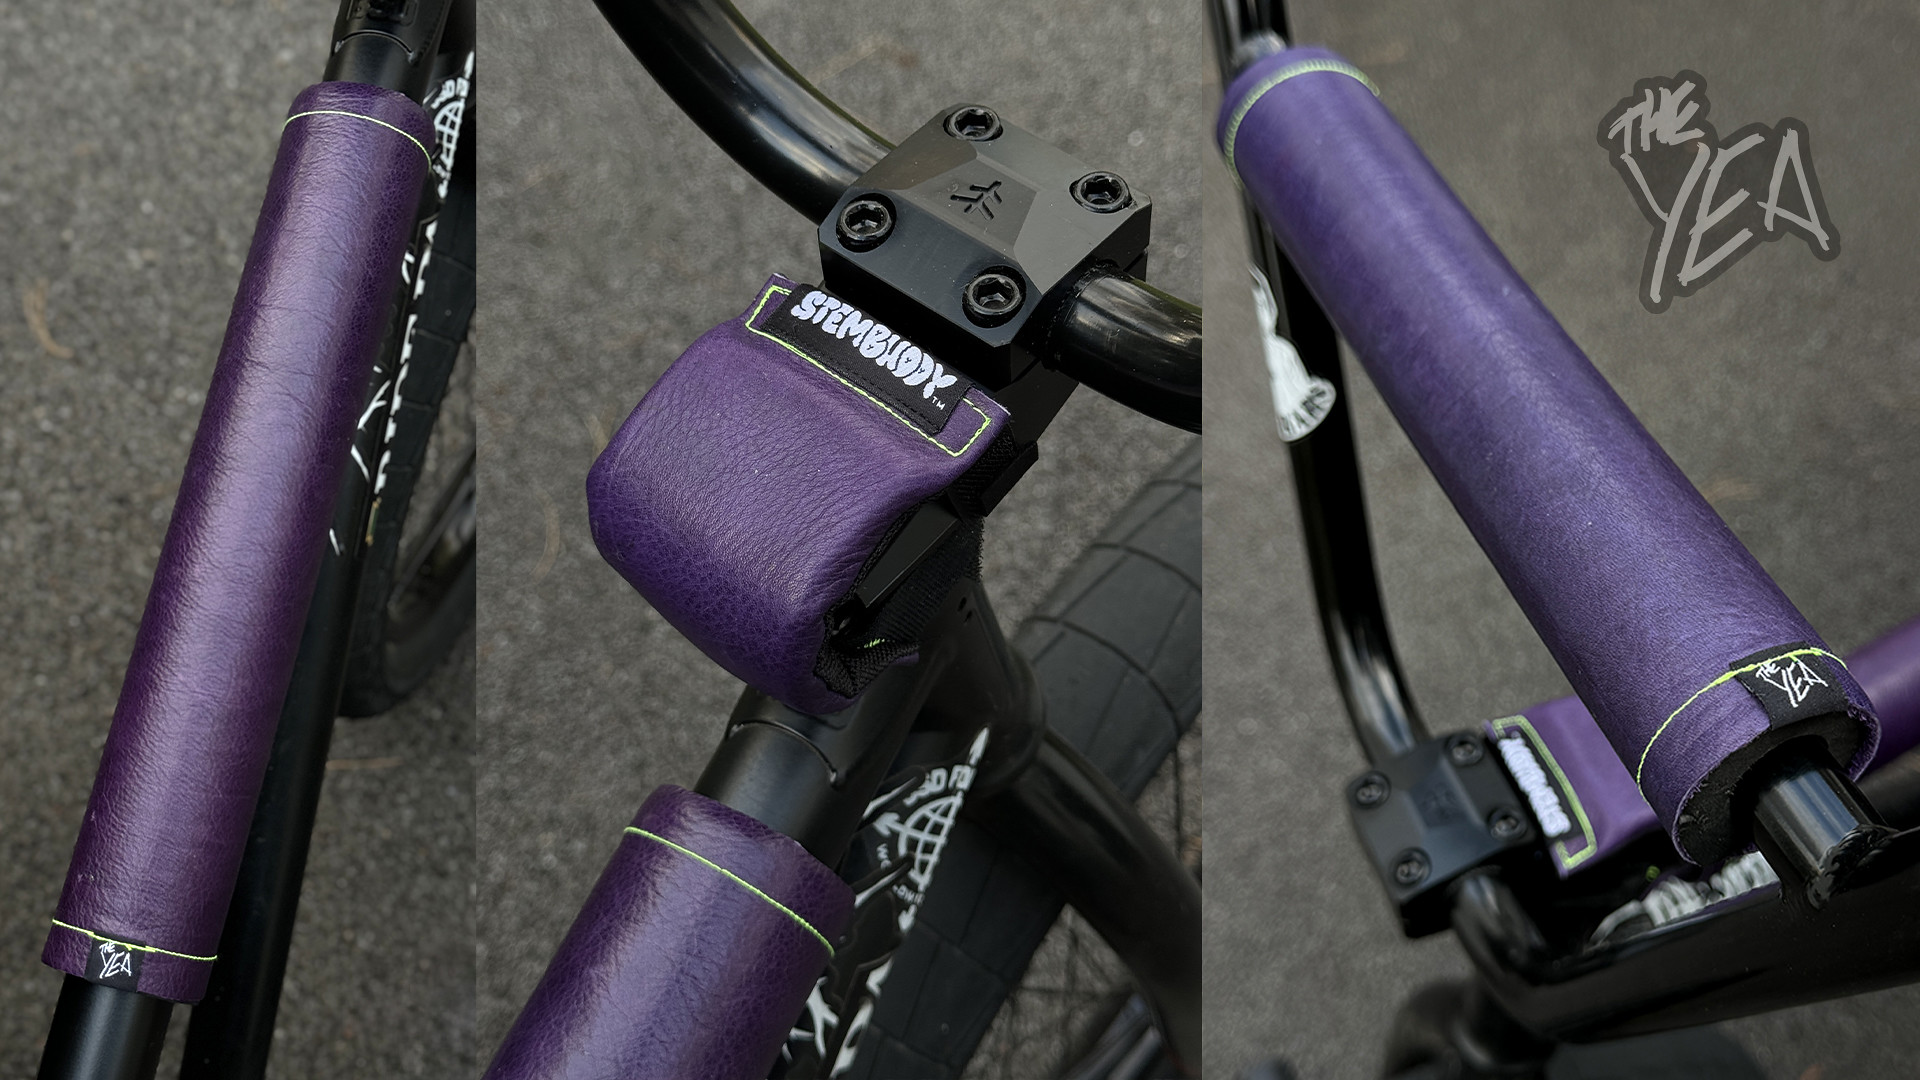 Spooky Leather Bike Pads | The Yea BMX